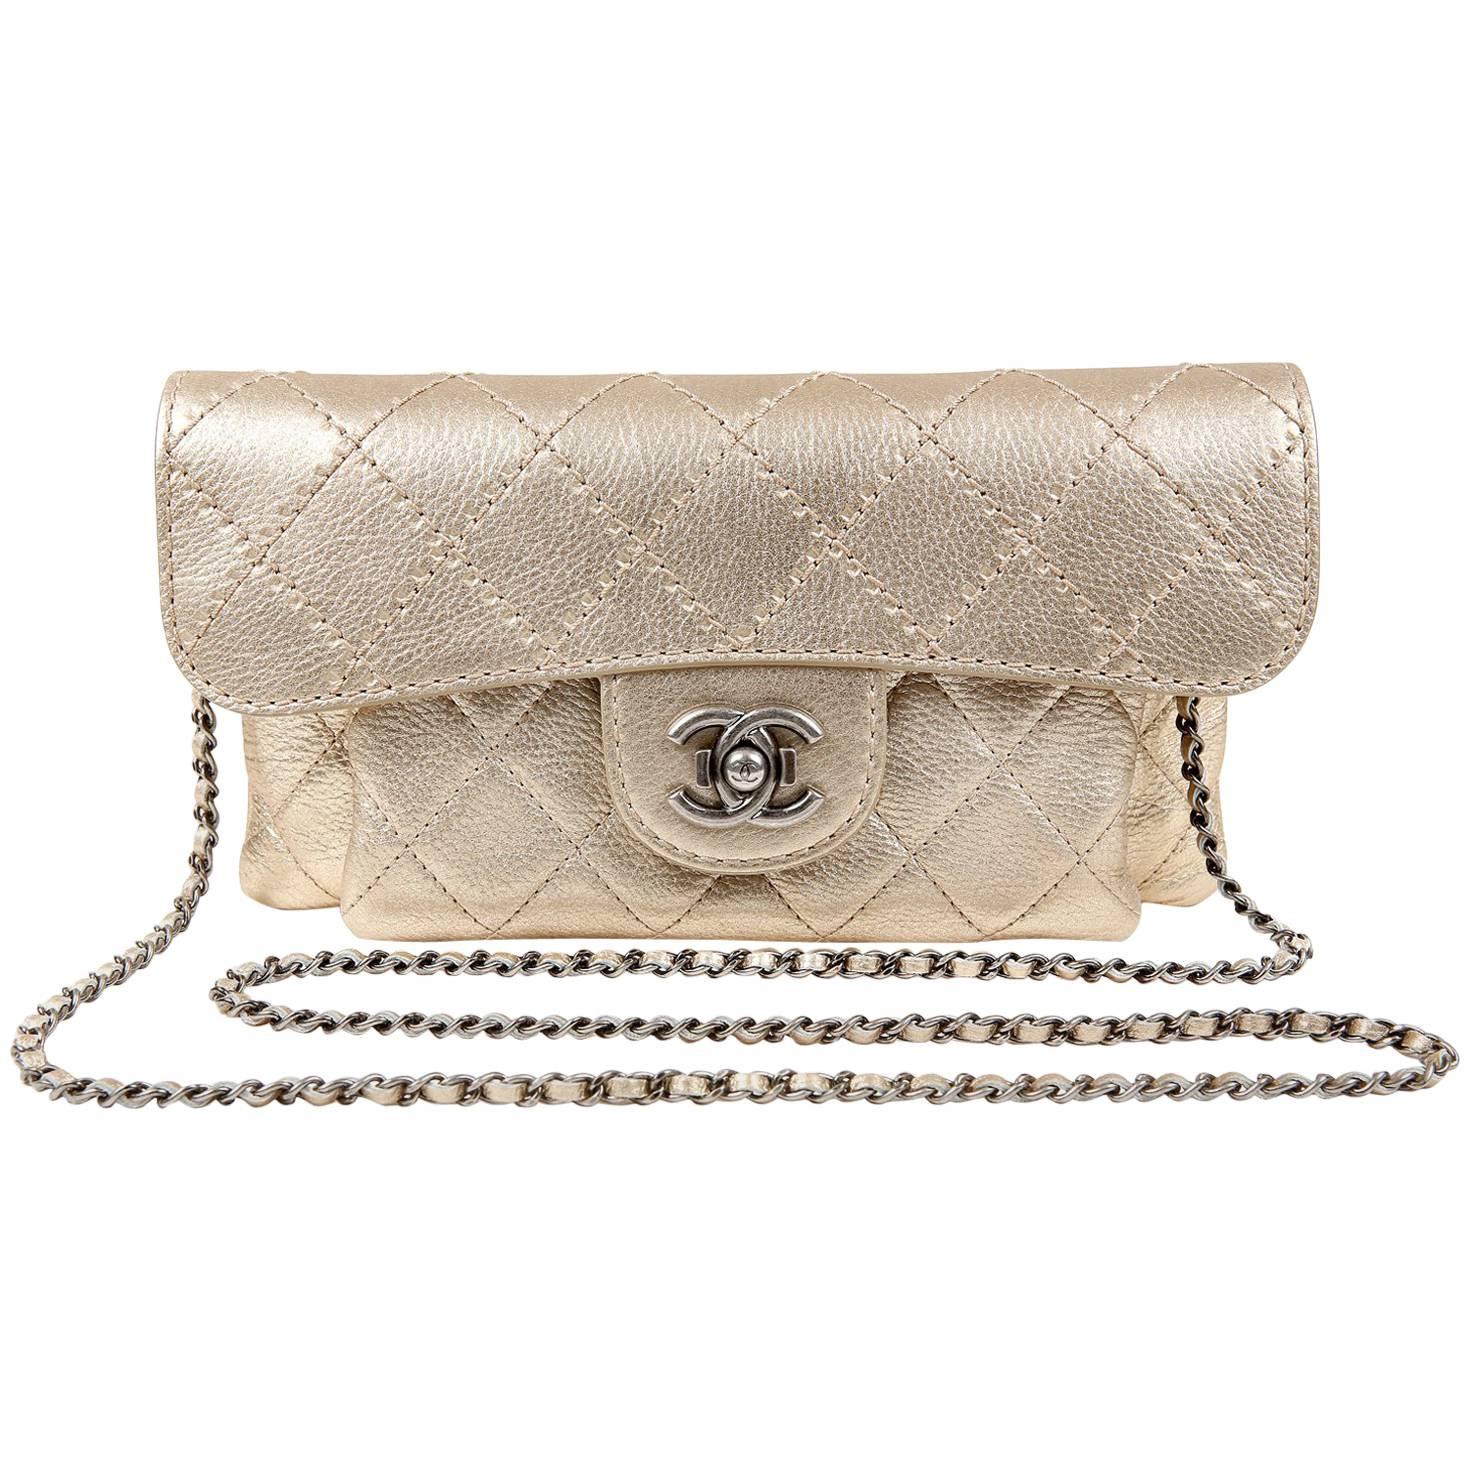 Chanel Metallic Gold Leather Cross Body Clutch Bag